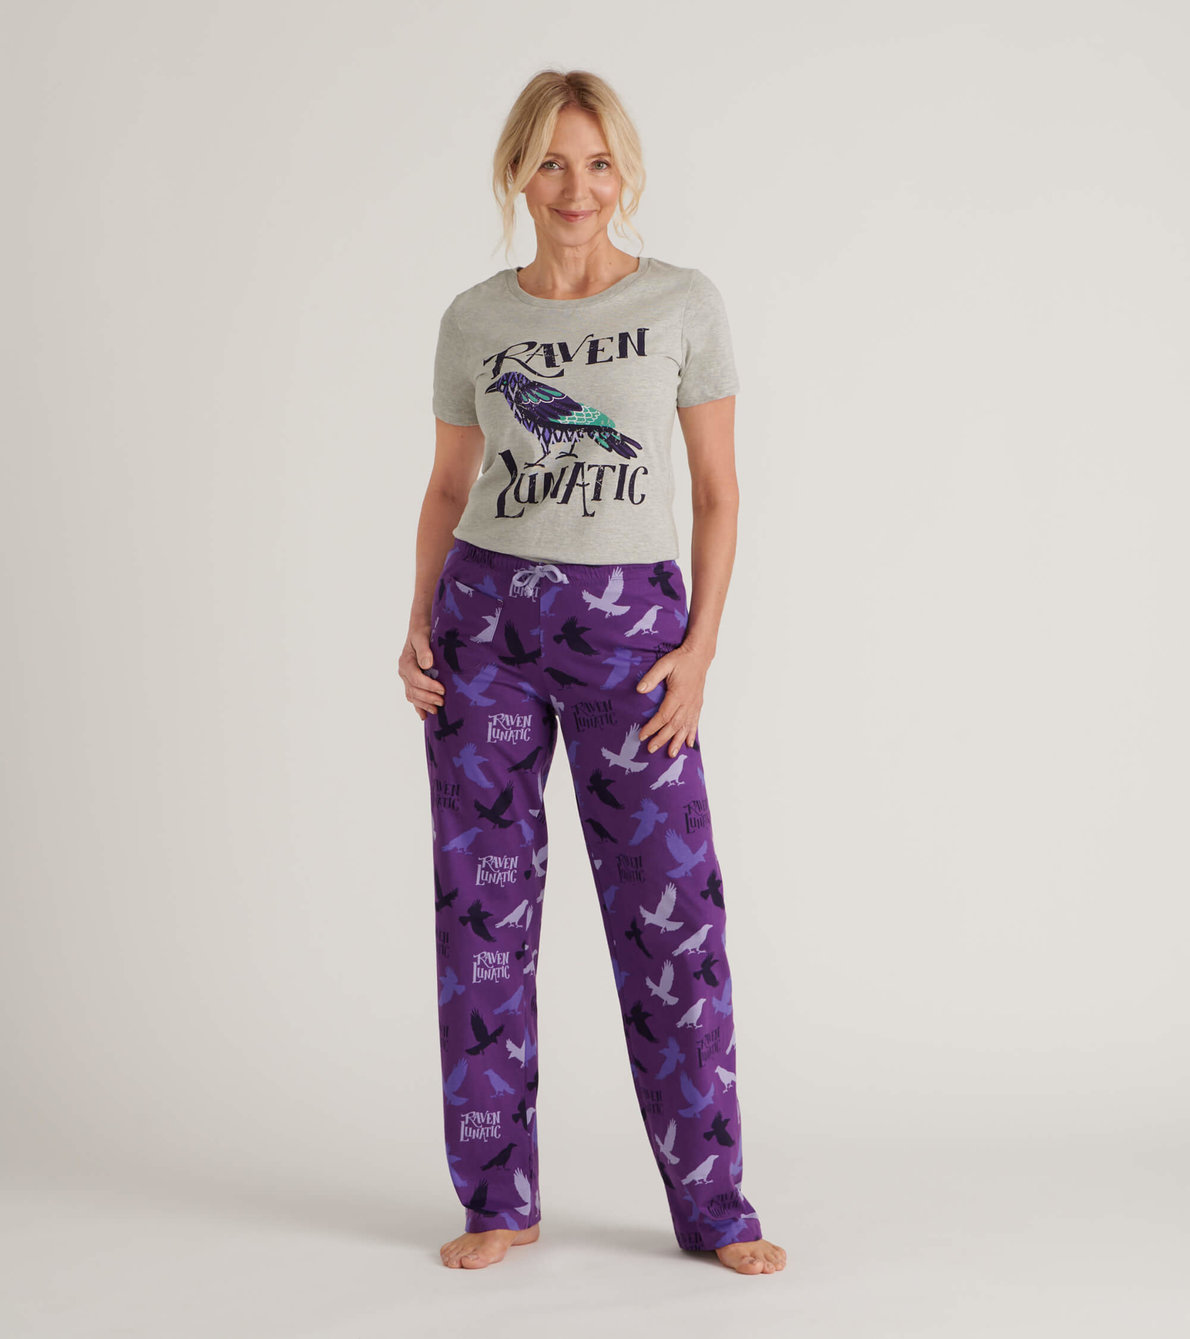 View larger image of Raven Lunatic Women's Pajama T-Shirt